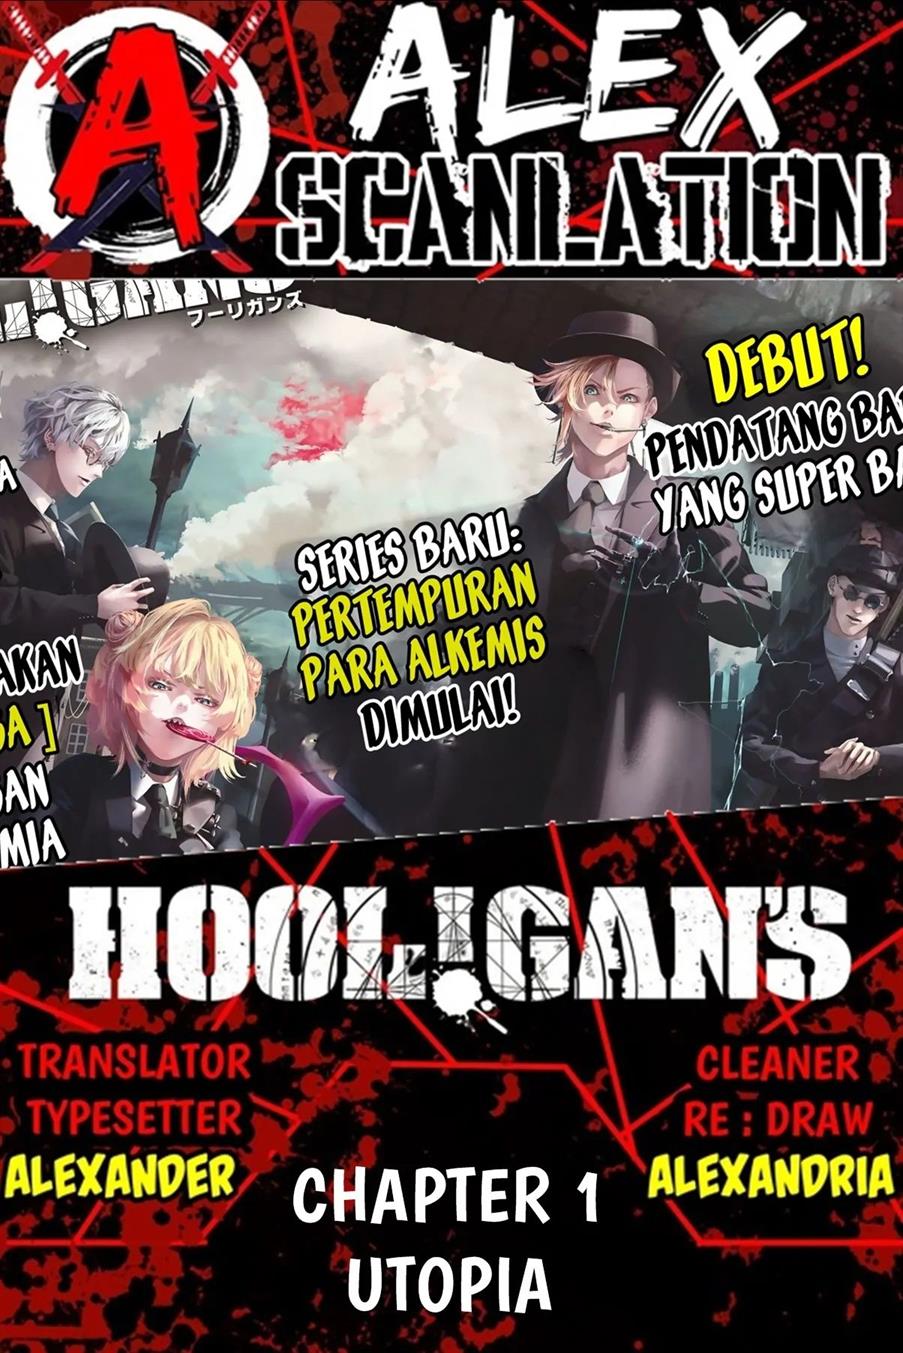 HOOL!GAN’S Chapter 1